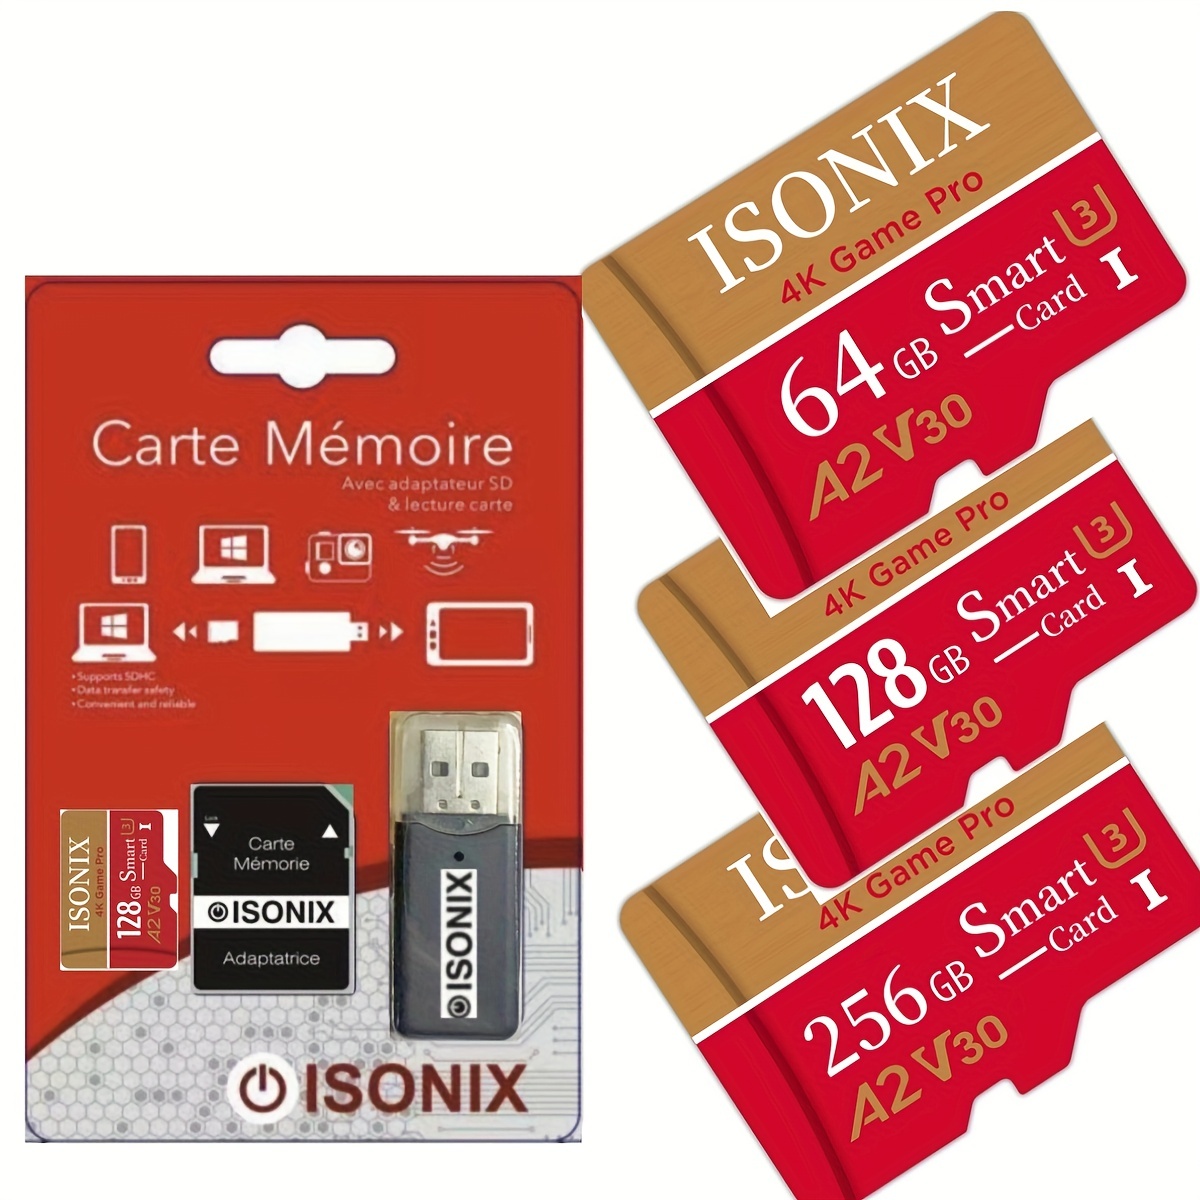 ISONIX Carte Mémoire Micro-sd 32 go Micro SDHC/SDXC + Adaptateur